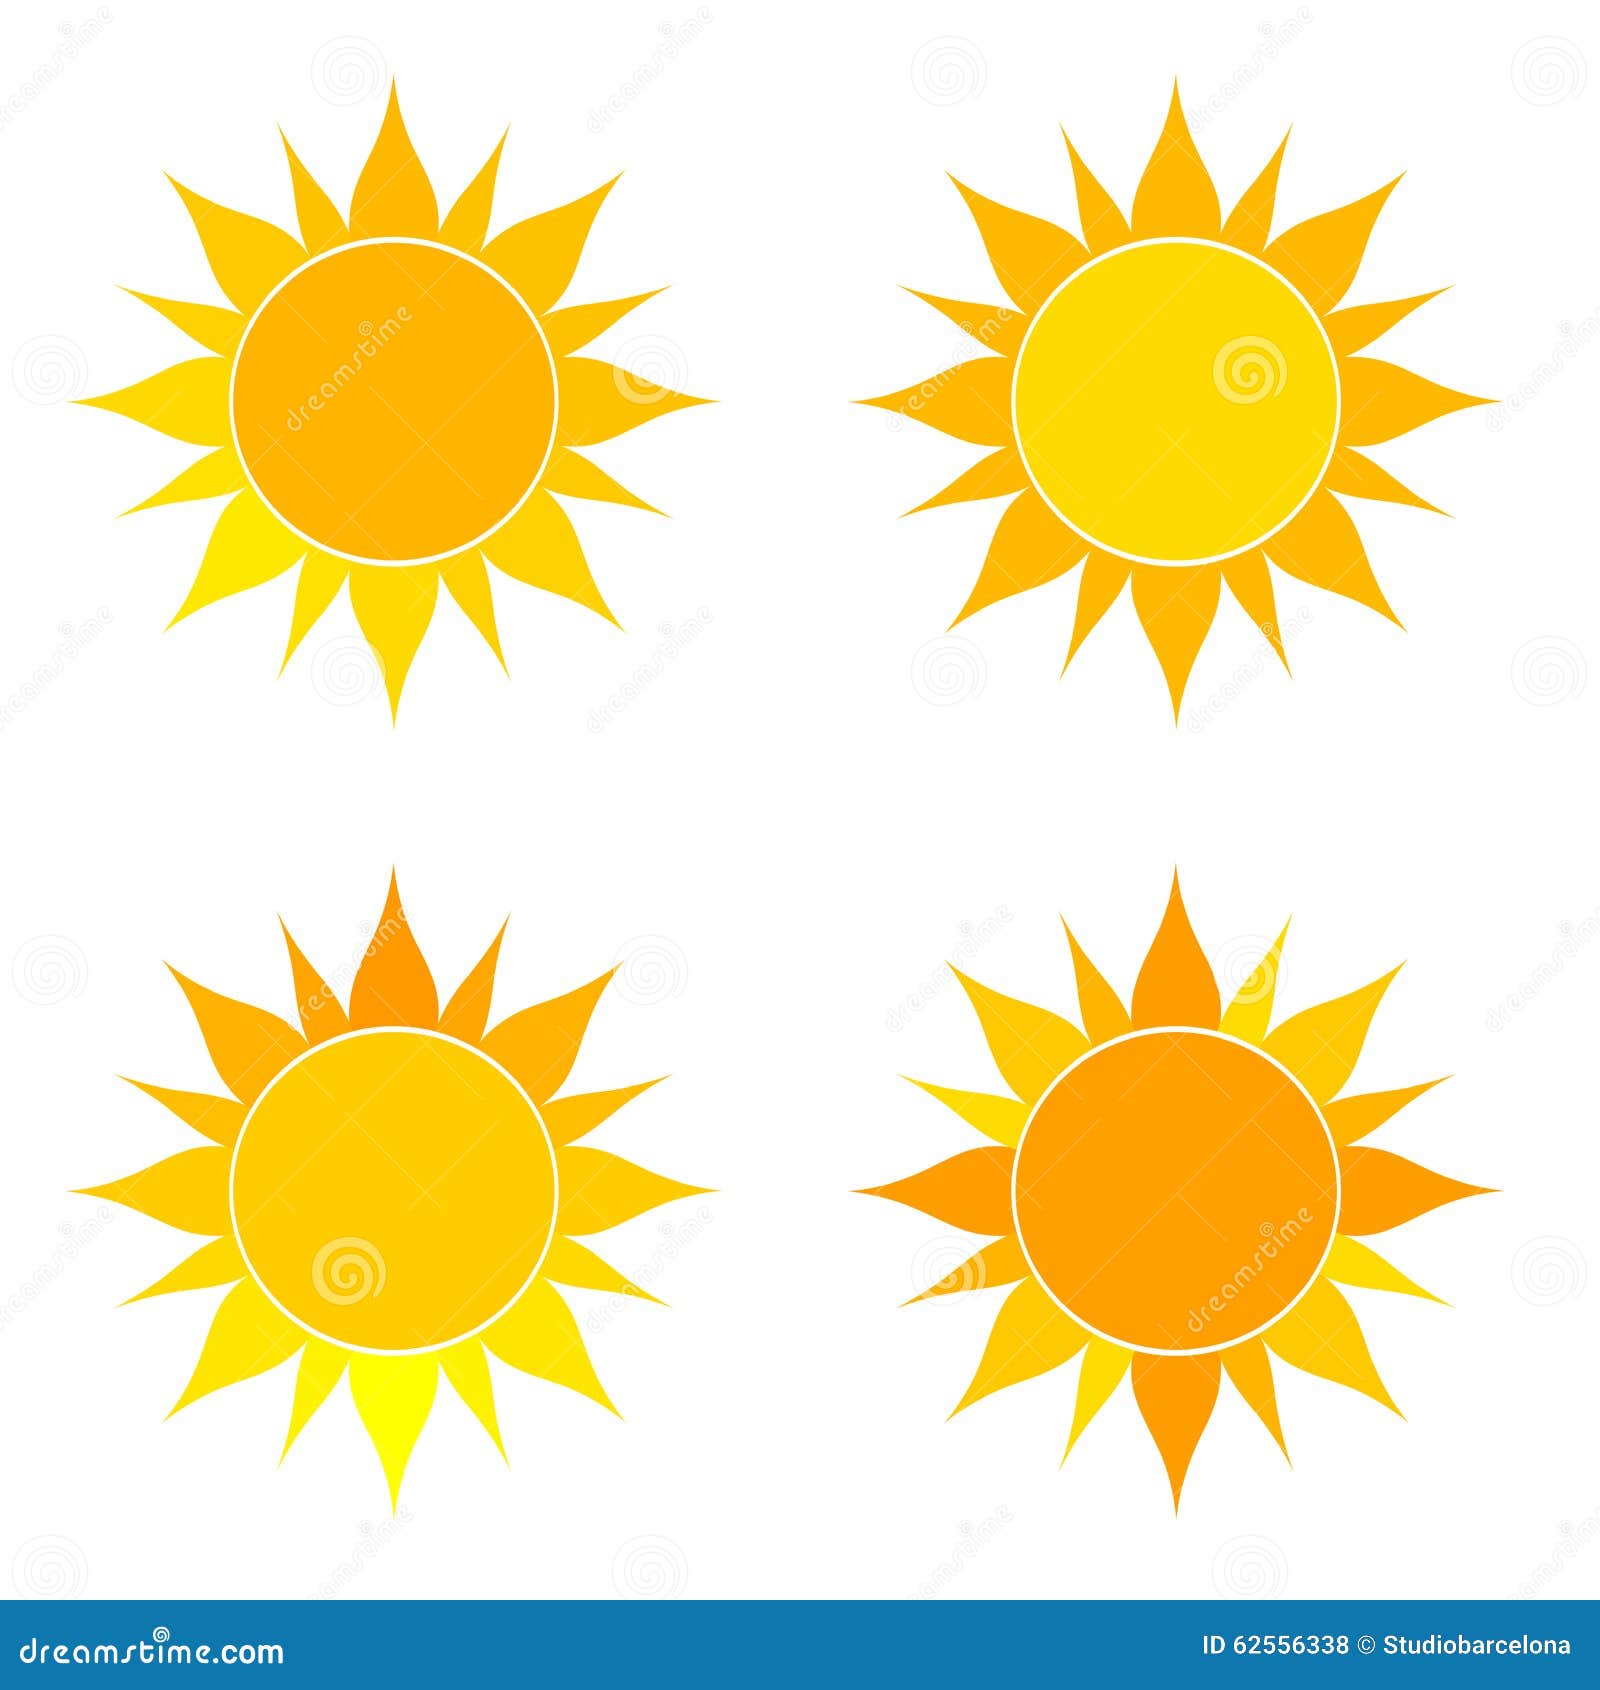 Suns set illustration stock vector. Illustration of shine - 62556338